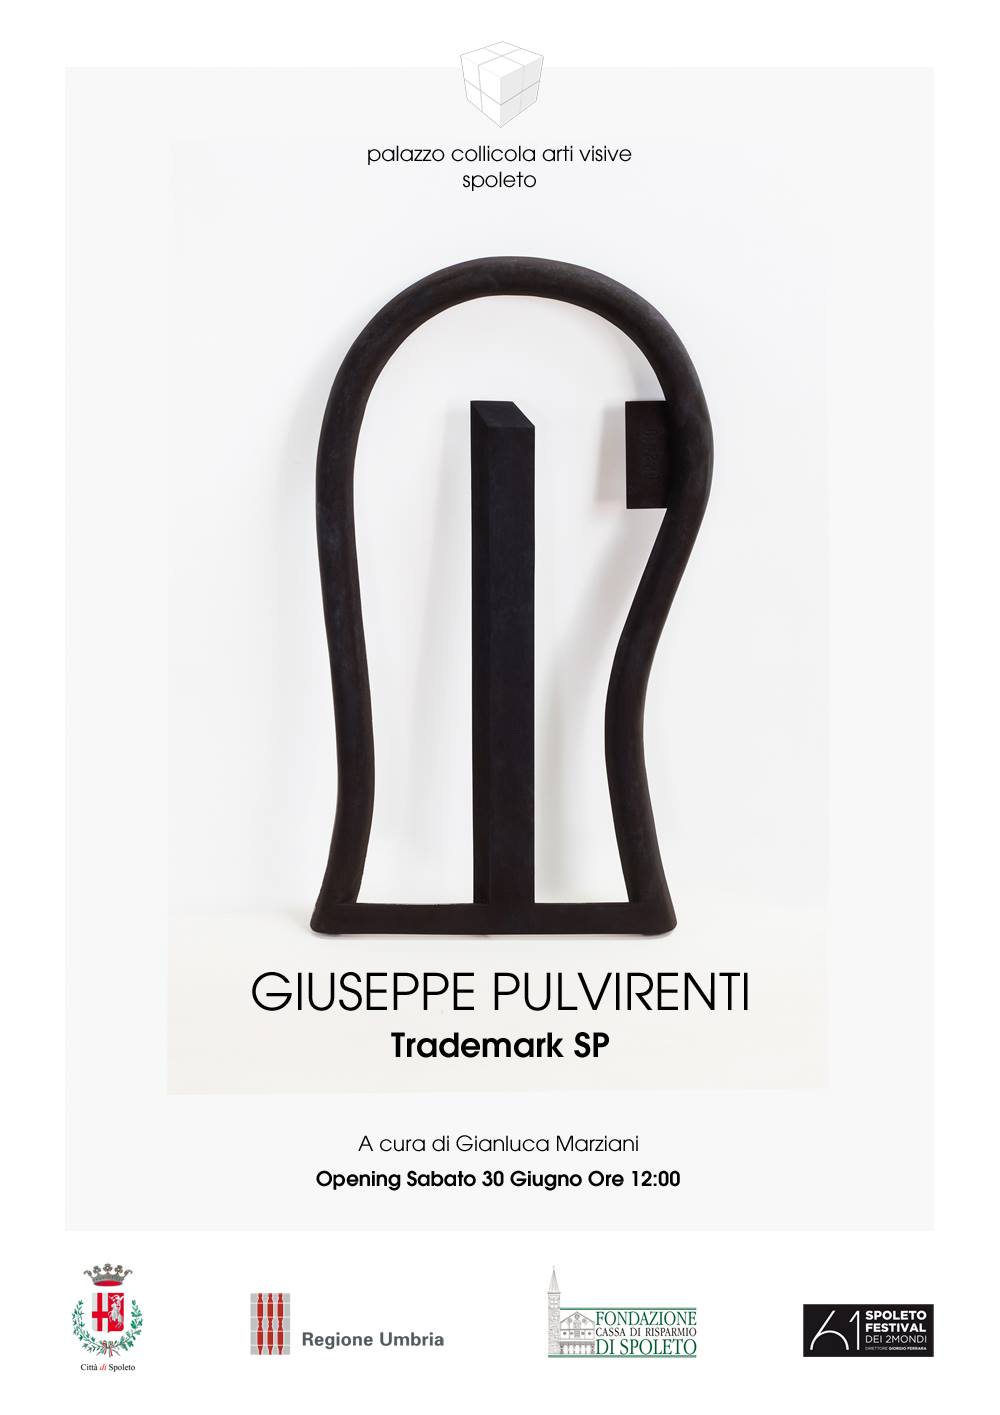 Giuseppe Pulvirenti - Trademark SP